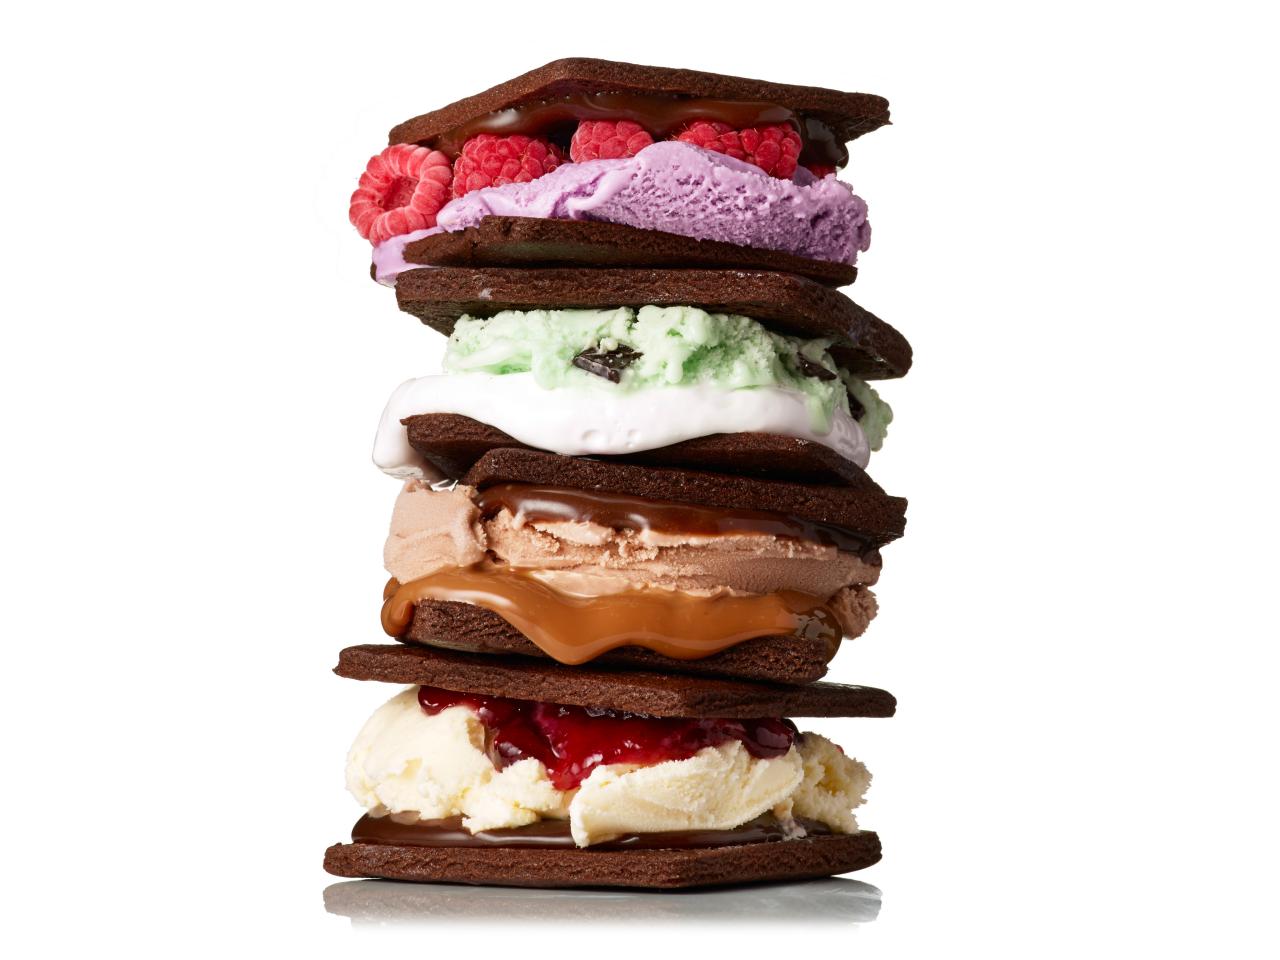 https://food.fnr.sndimg.com/content/dam/images/food/fullset/2014/6/11/1/FNM_070114-Chocolate-Cookie-Ice-Cream-Sandwiches-Recipe_s4x3.jpg.rend.hgtvcom.1280.960.suffix/1402589208026.jpeg